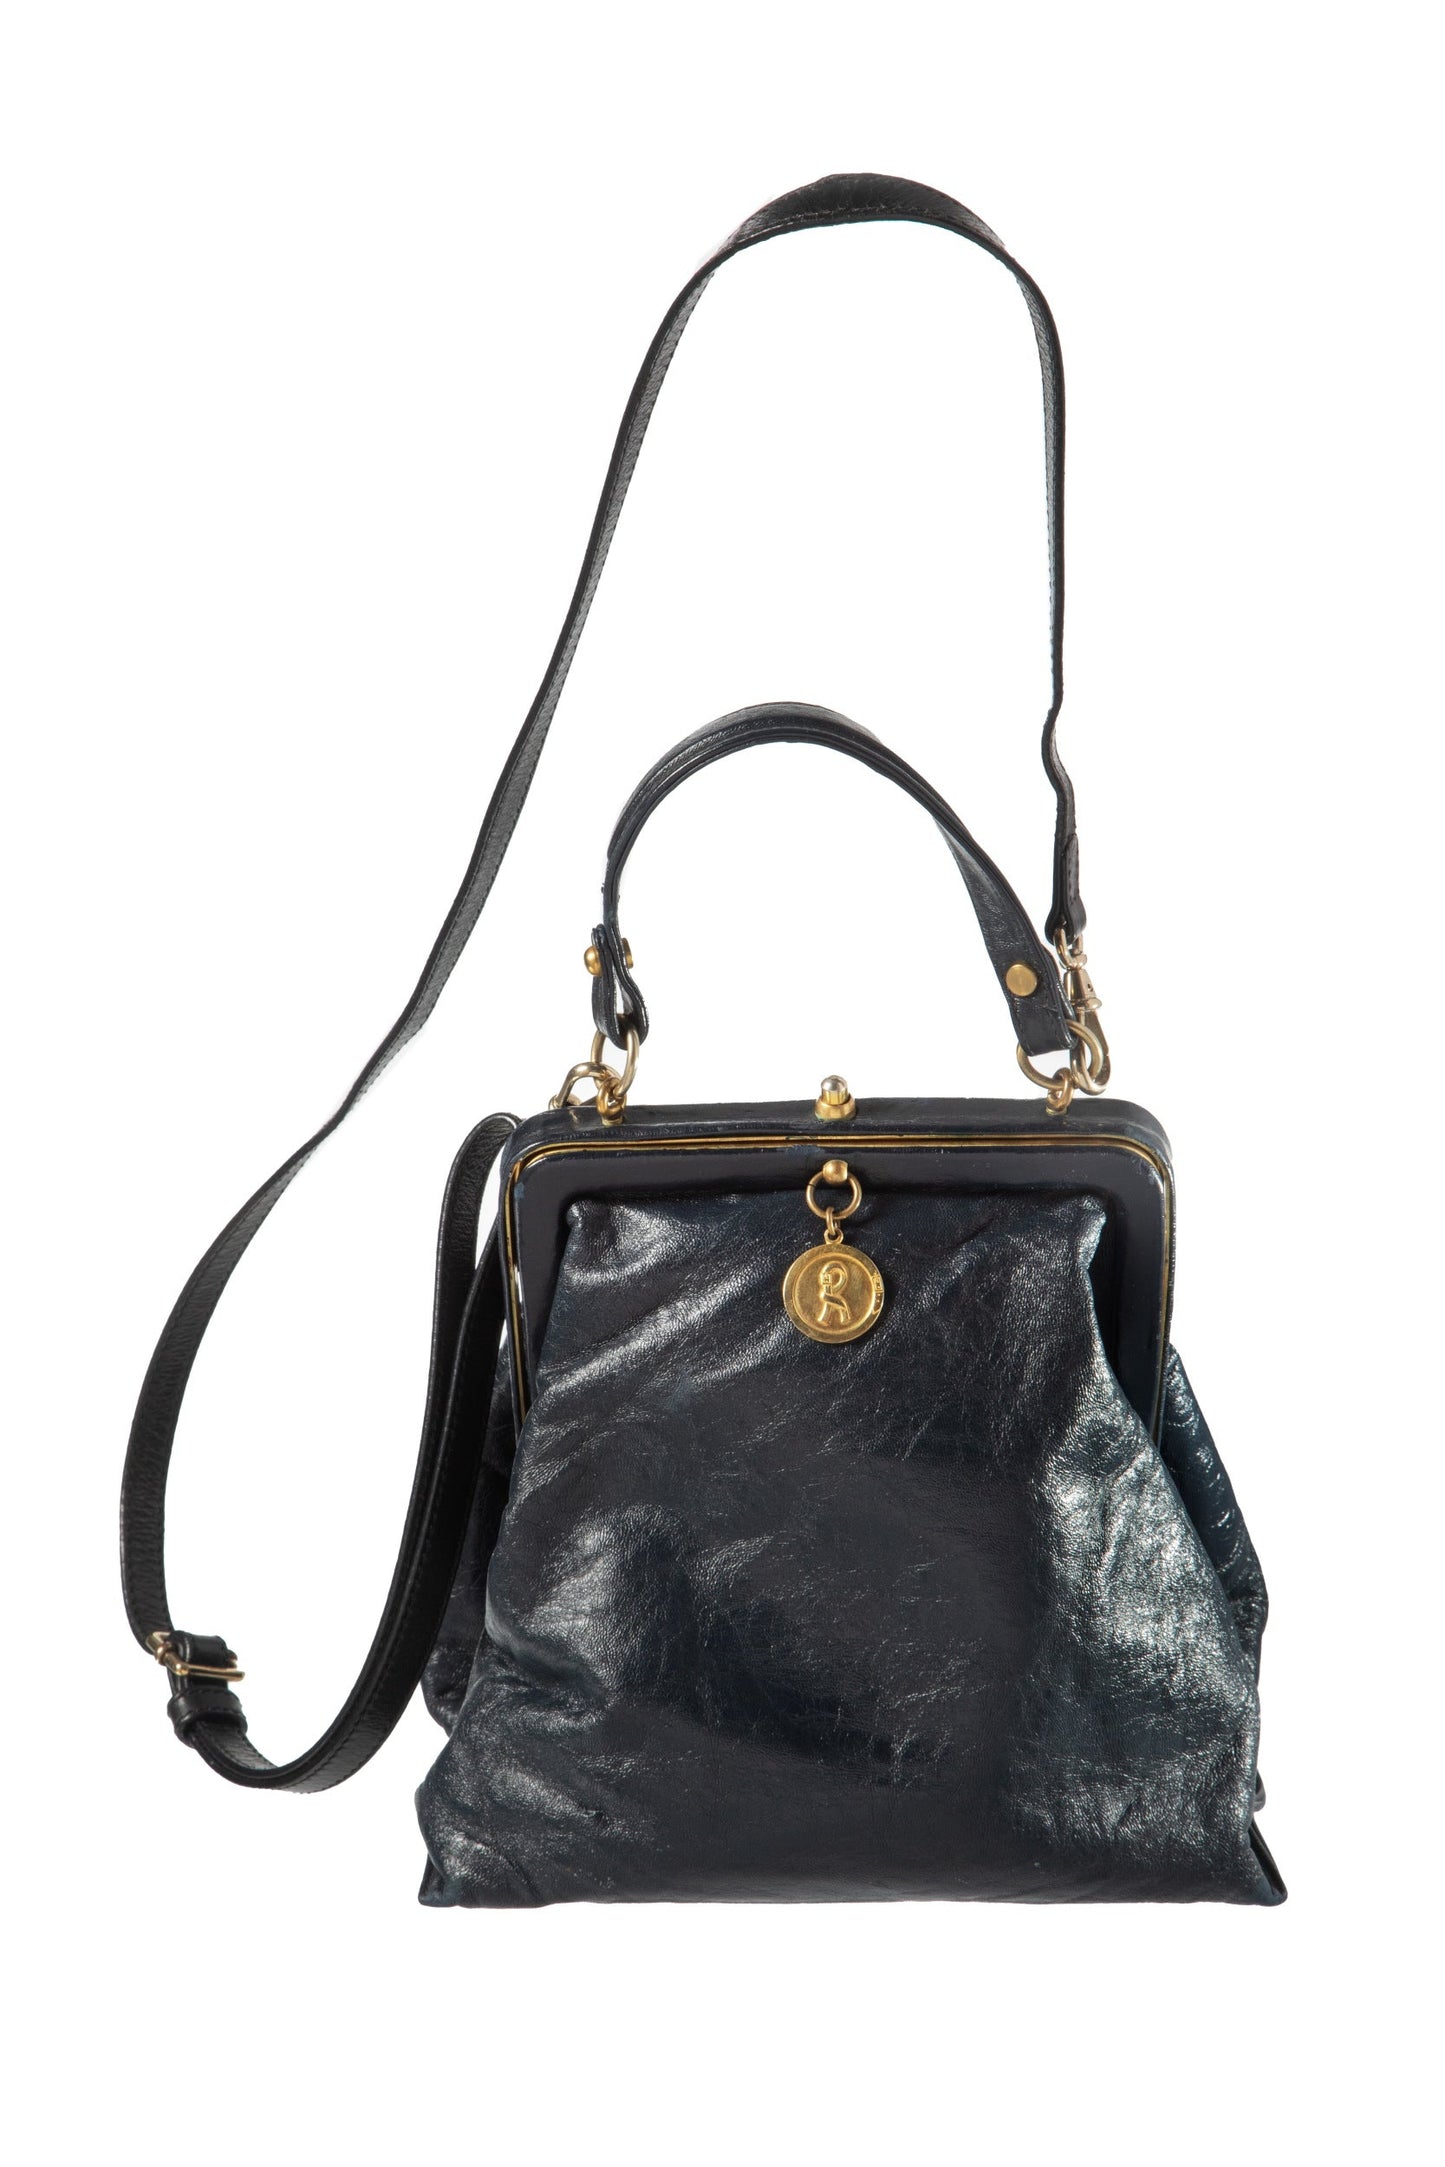 Roberta di Camerino leather handbag